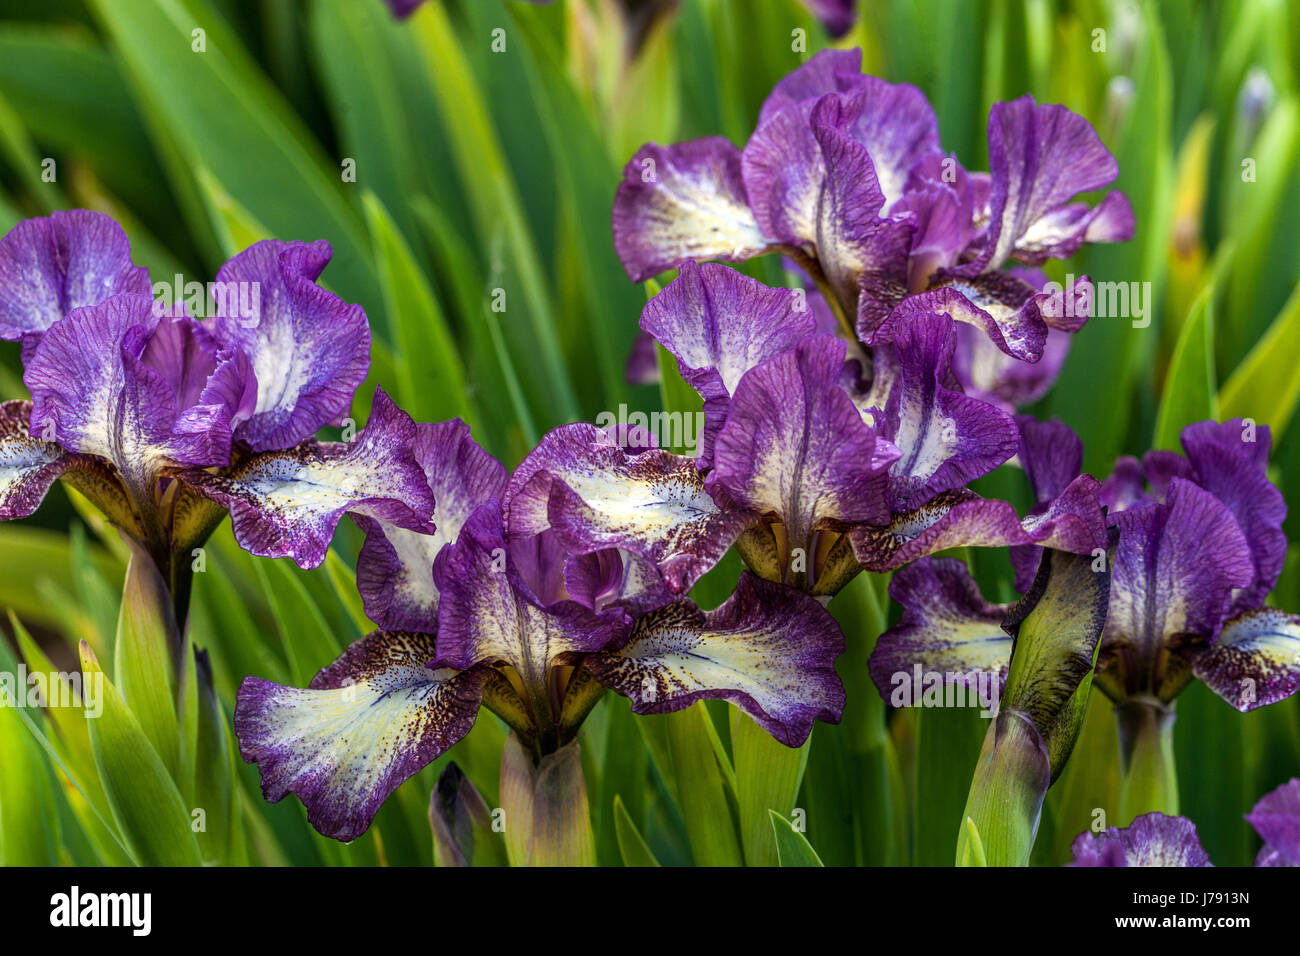 Purple flowers Standard Dwarf Bearded Irises barbata nana Iris 'Transcribe' Stock Photo